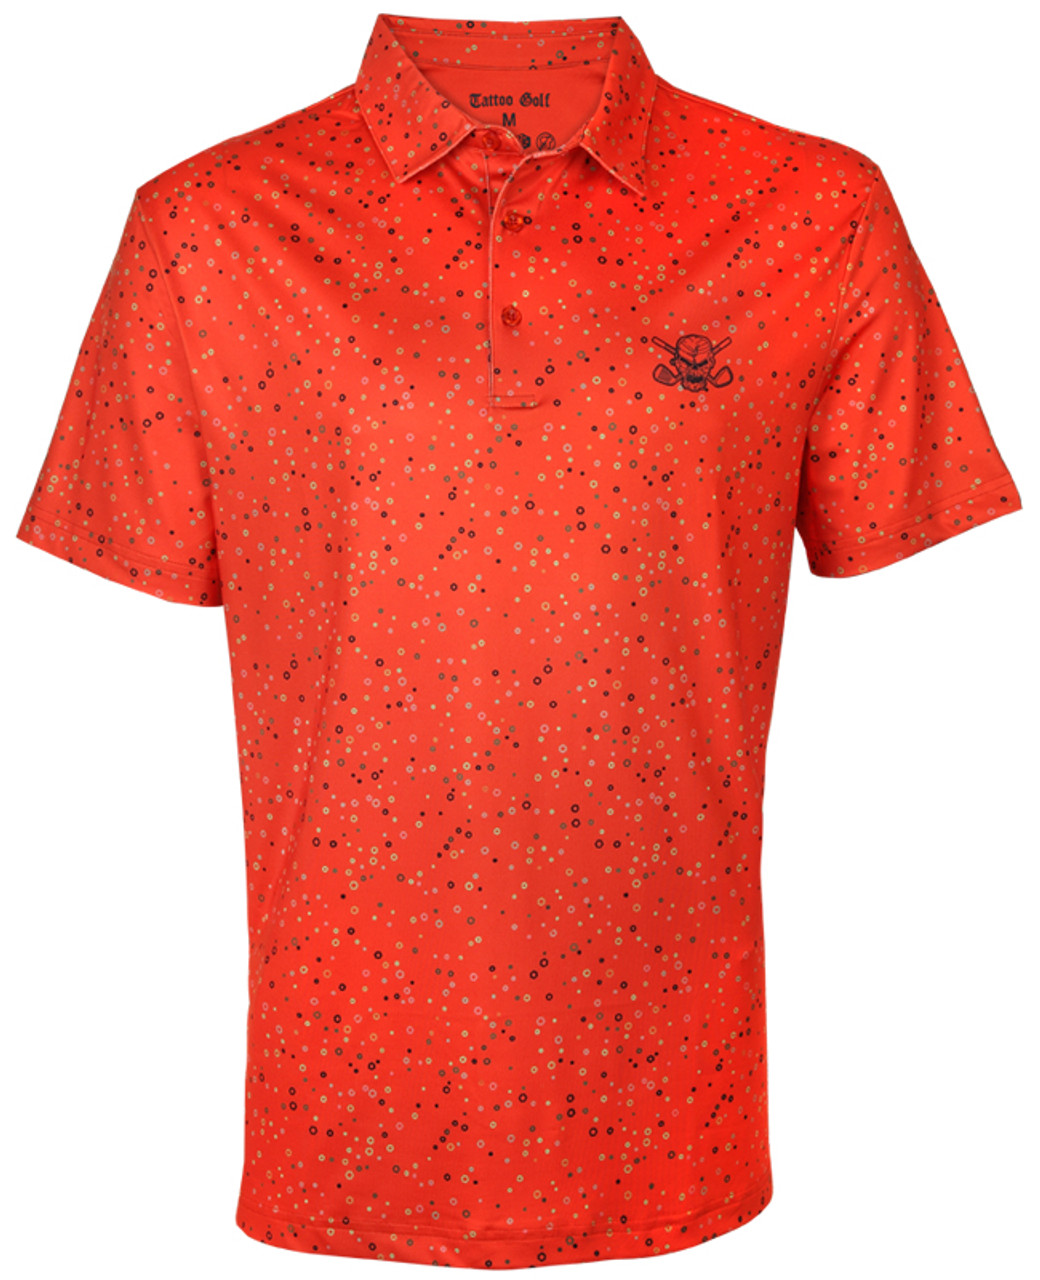 Players graphic print orange golf shirt Men's Golf Polo (orange) Wild Golf  Shirts with skulls